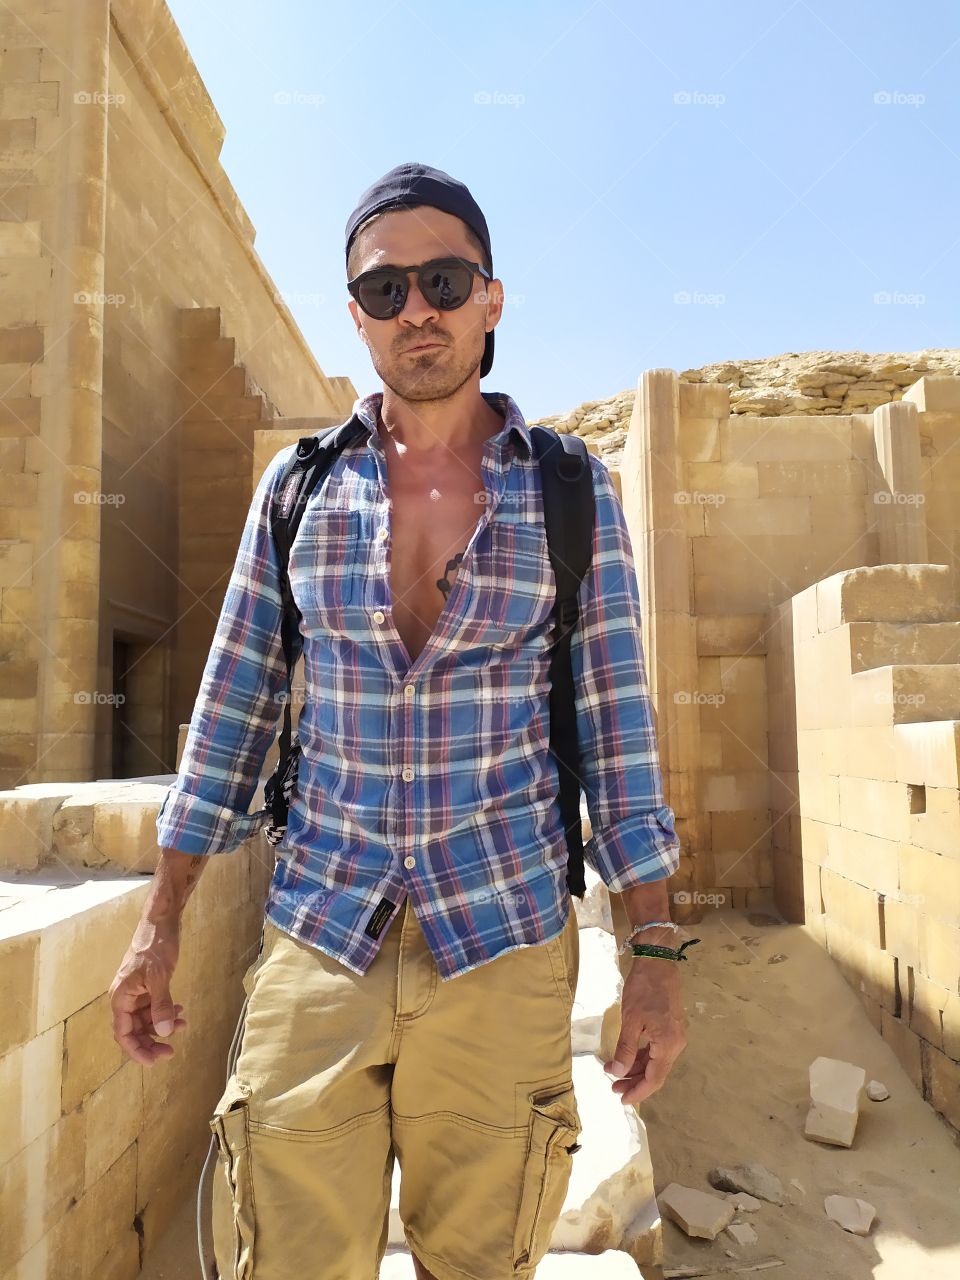 from ruin's city at saqqara Egypt in desert like man from desert life really very amazing.